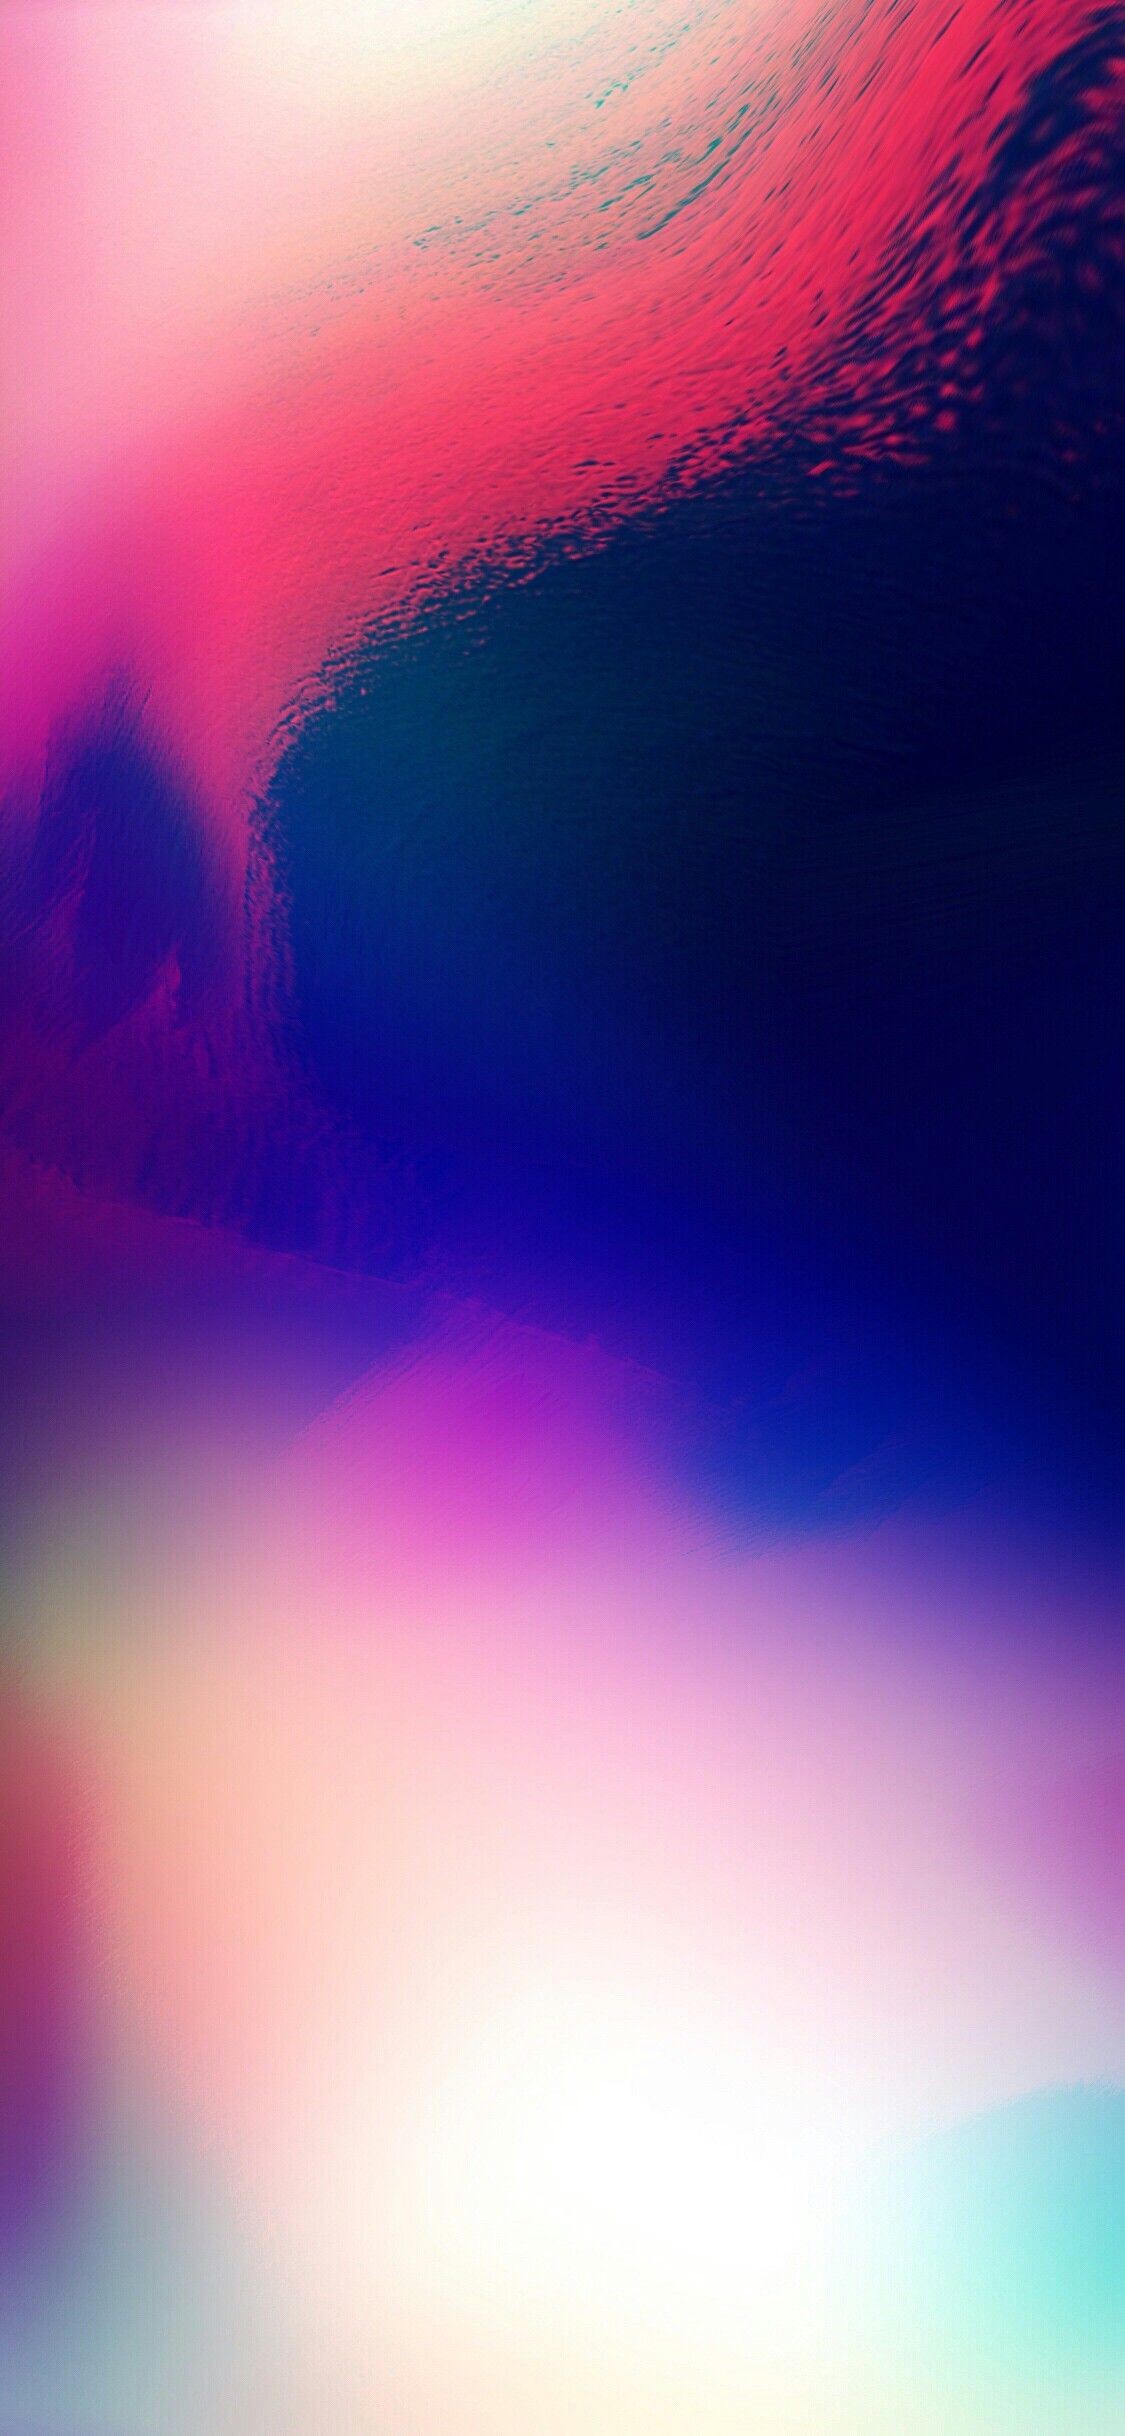 Iphone 5s壁紙 空 青い バイオレット 紫の 光 Wallpaperuse